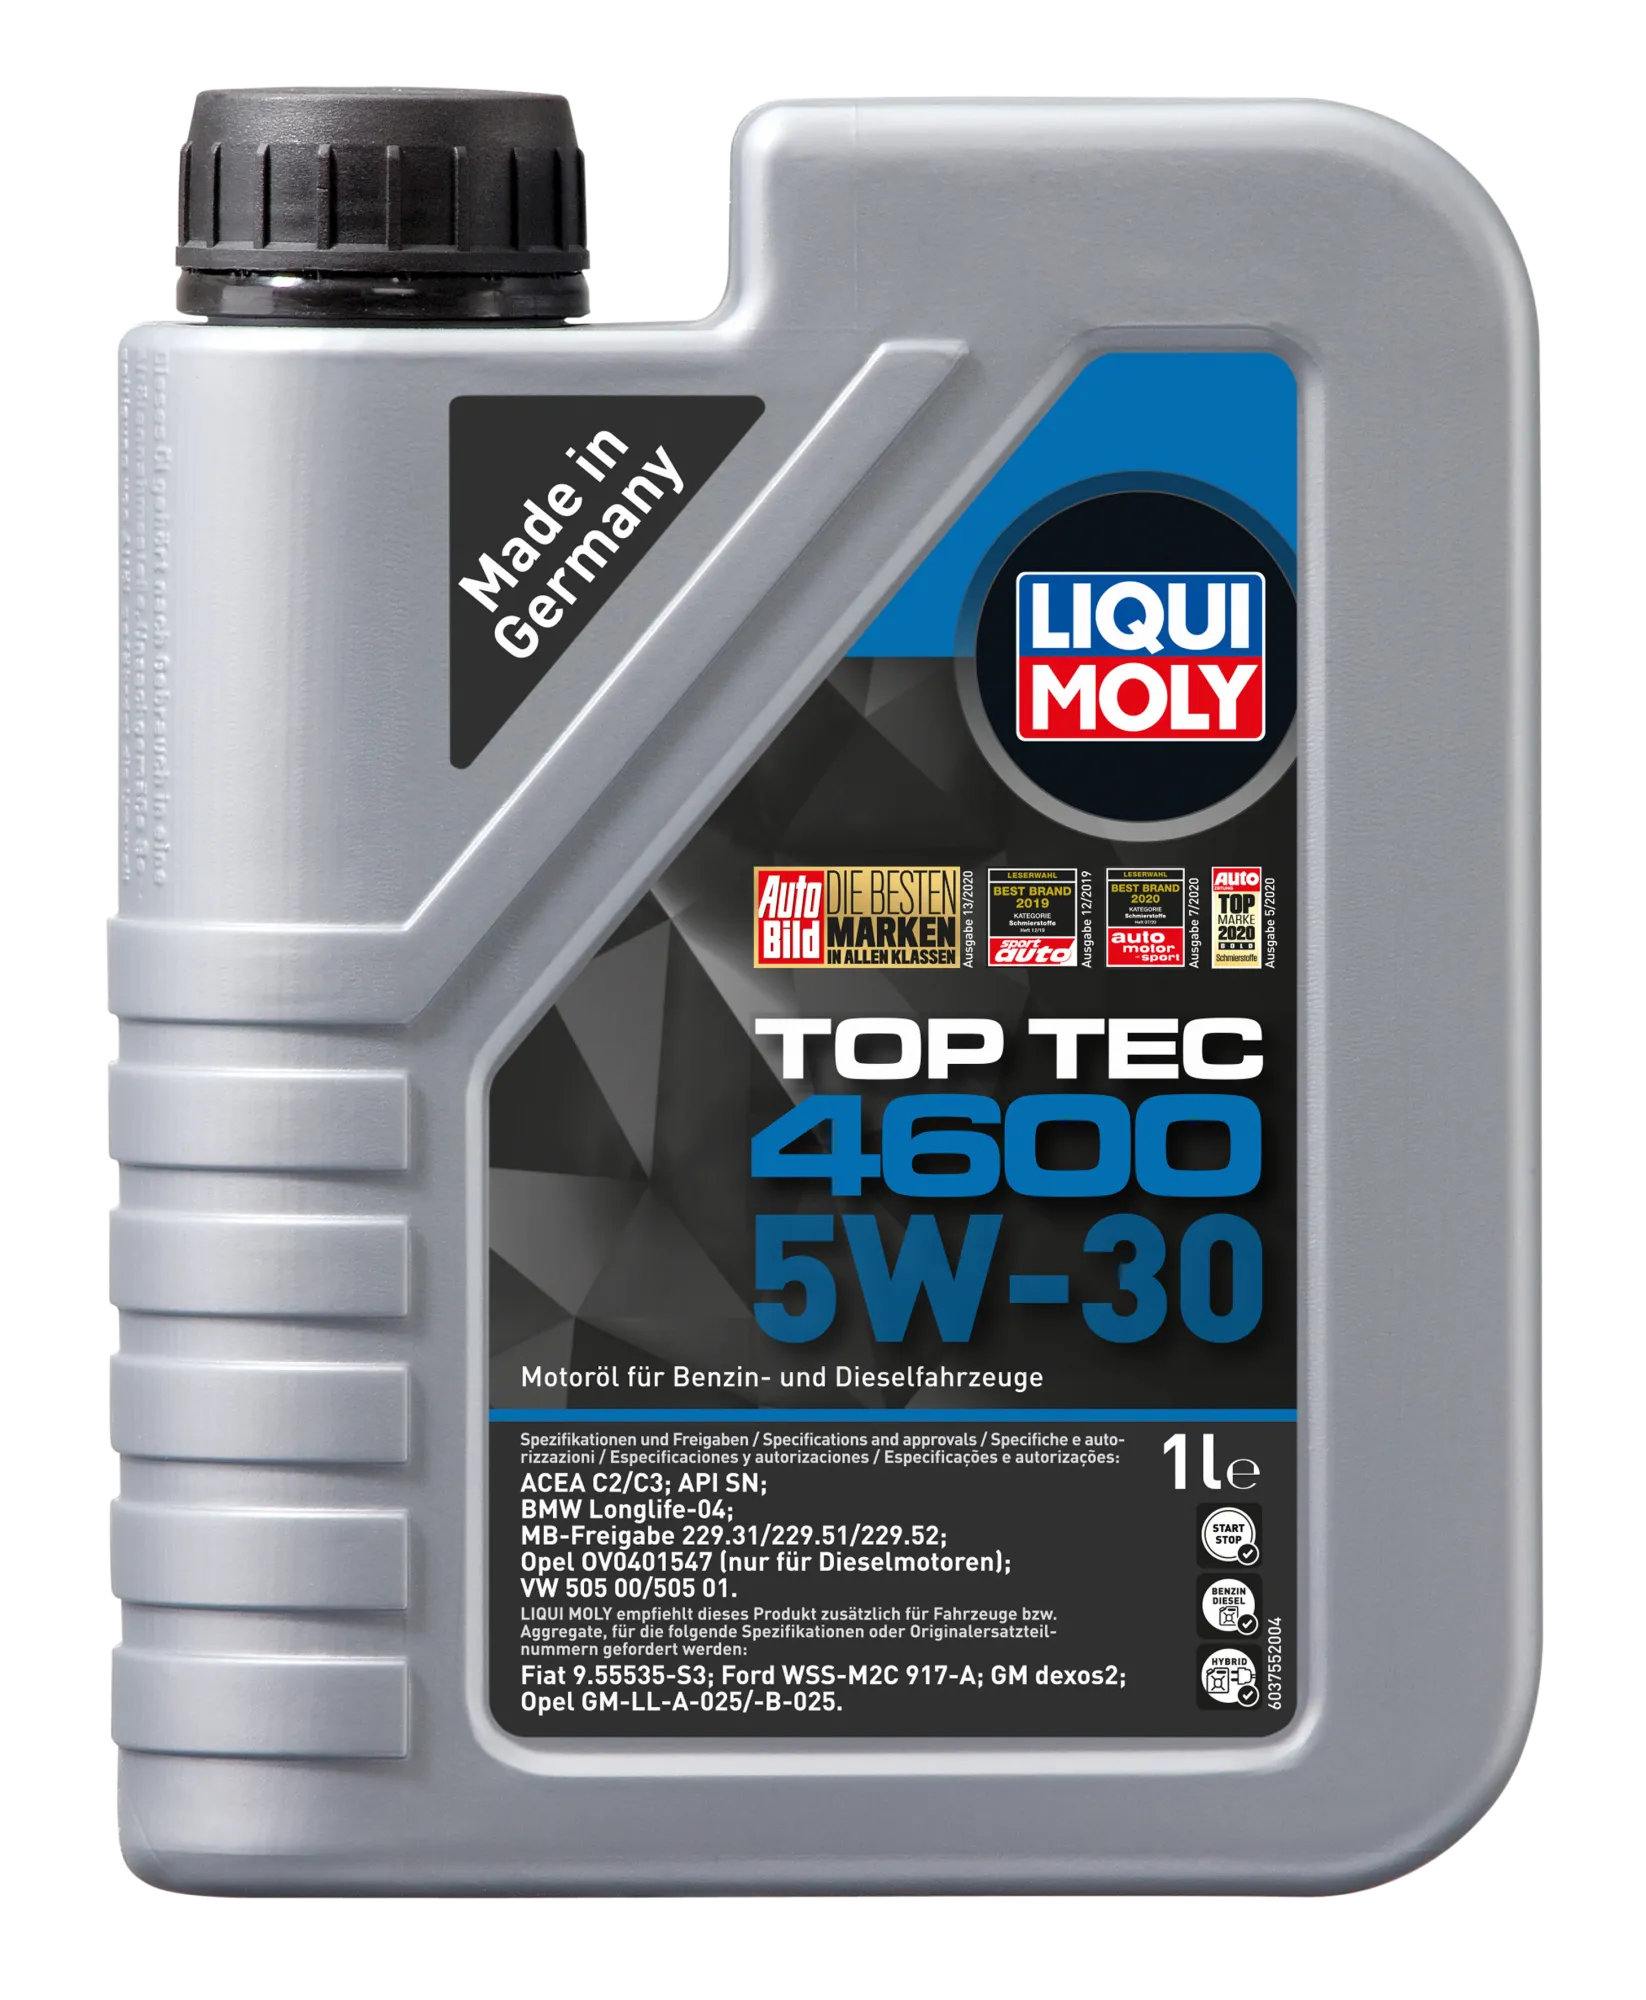 Liqui Moly 5W30 Top Tec 4600 Synthetisches Motoröl 2315 (1L) Longlife-04 C2/C3 dexos2 4100420037559